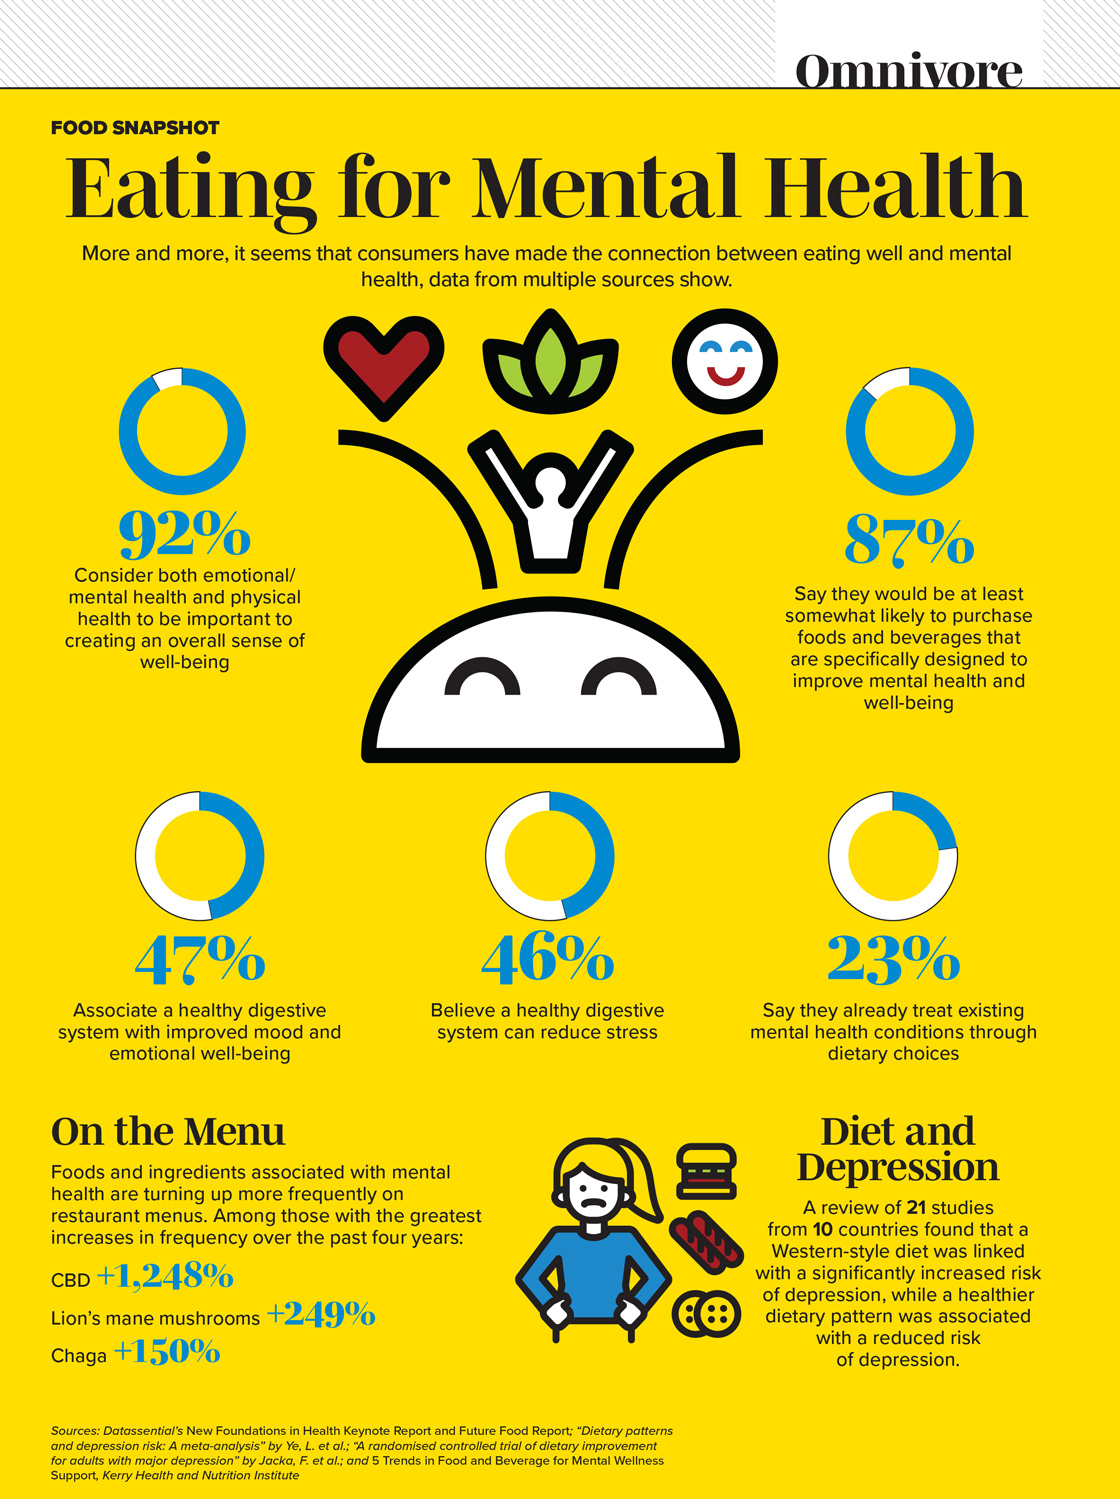 Eating for Mental Health